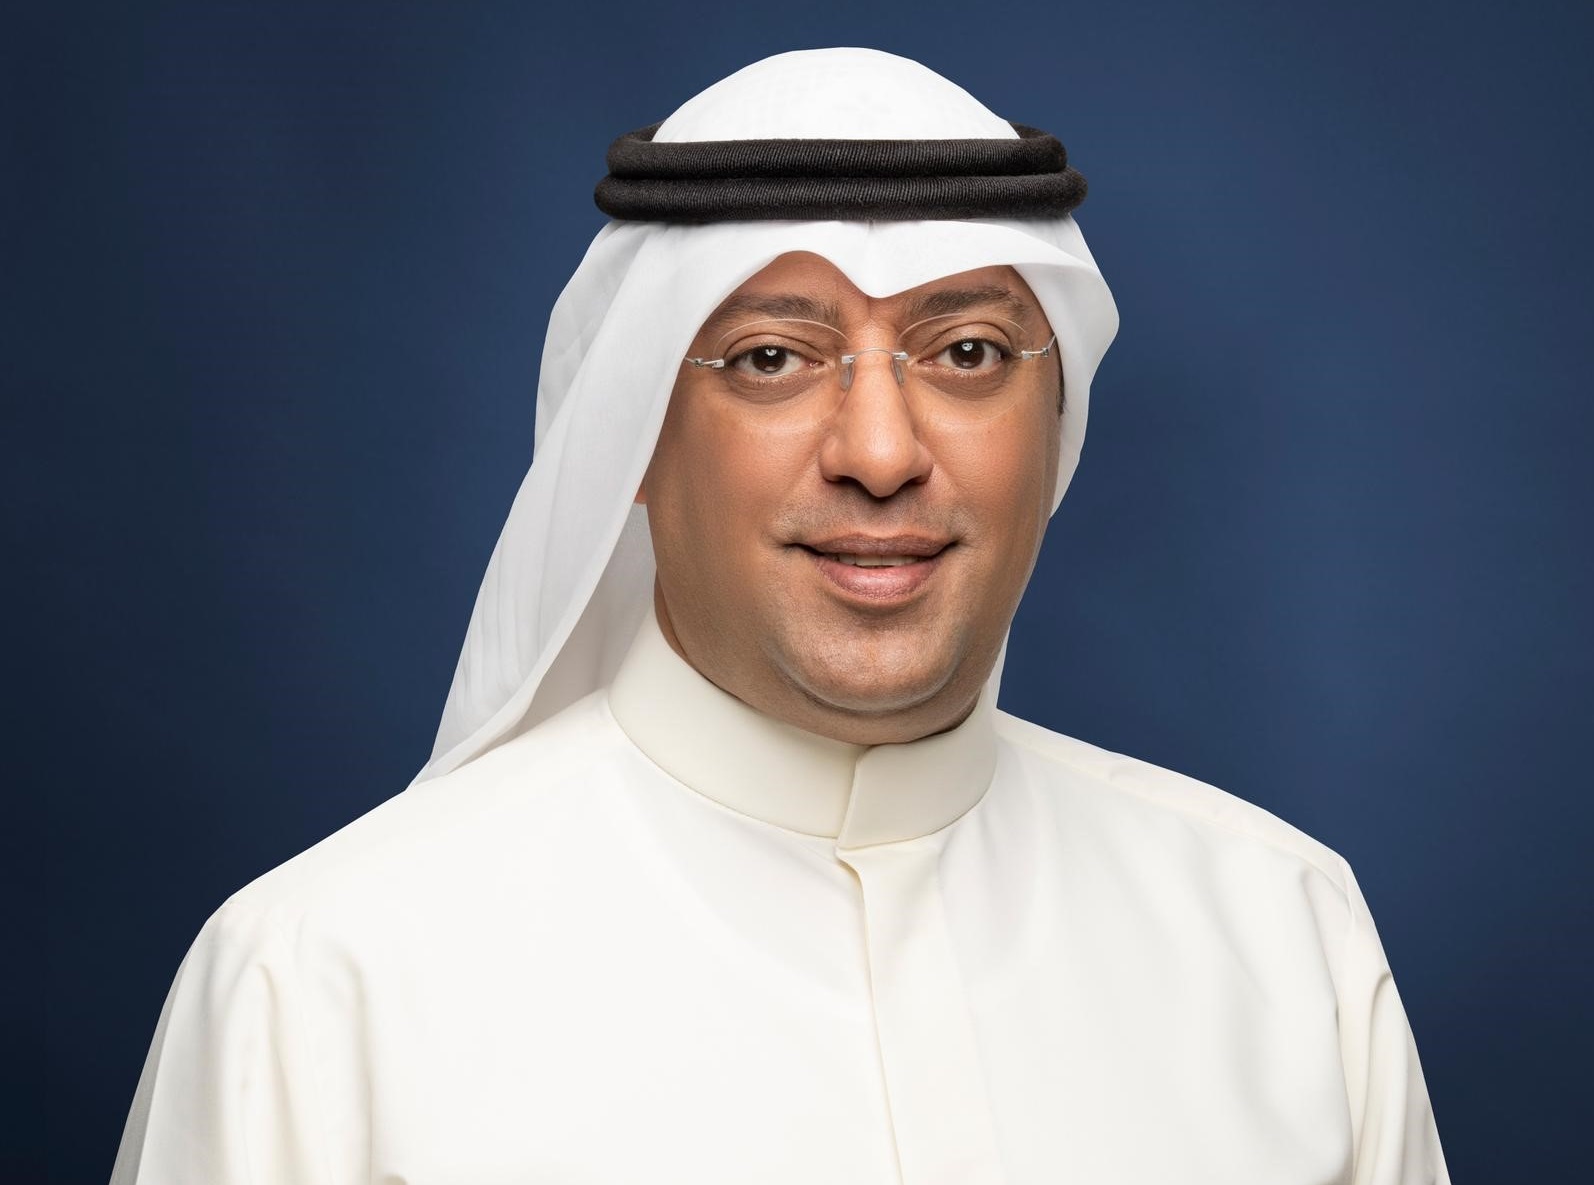 Insurance Regulatory Unit head Mohammad Sulaiman Al-Otaibi